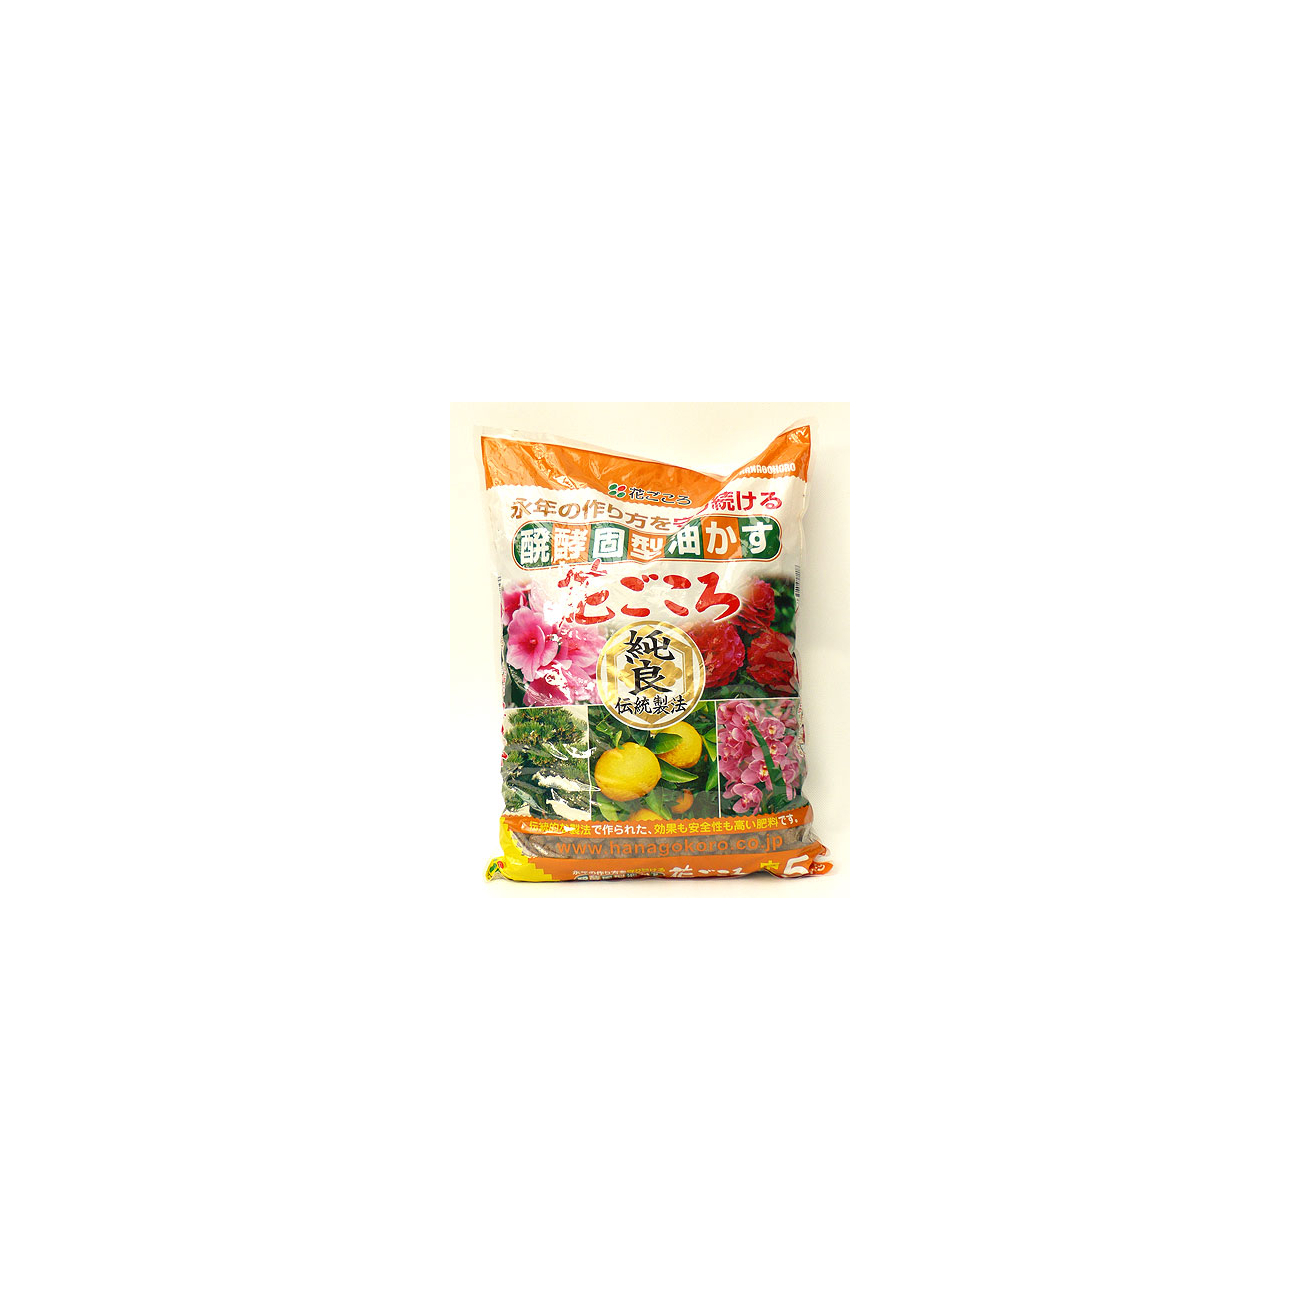 Hanagokoro organic Japanese fertilizer small grain size 5 Kg